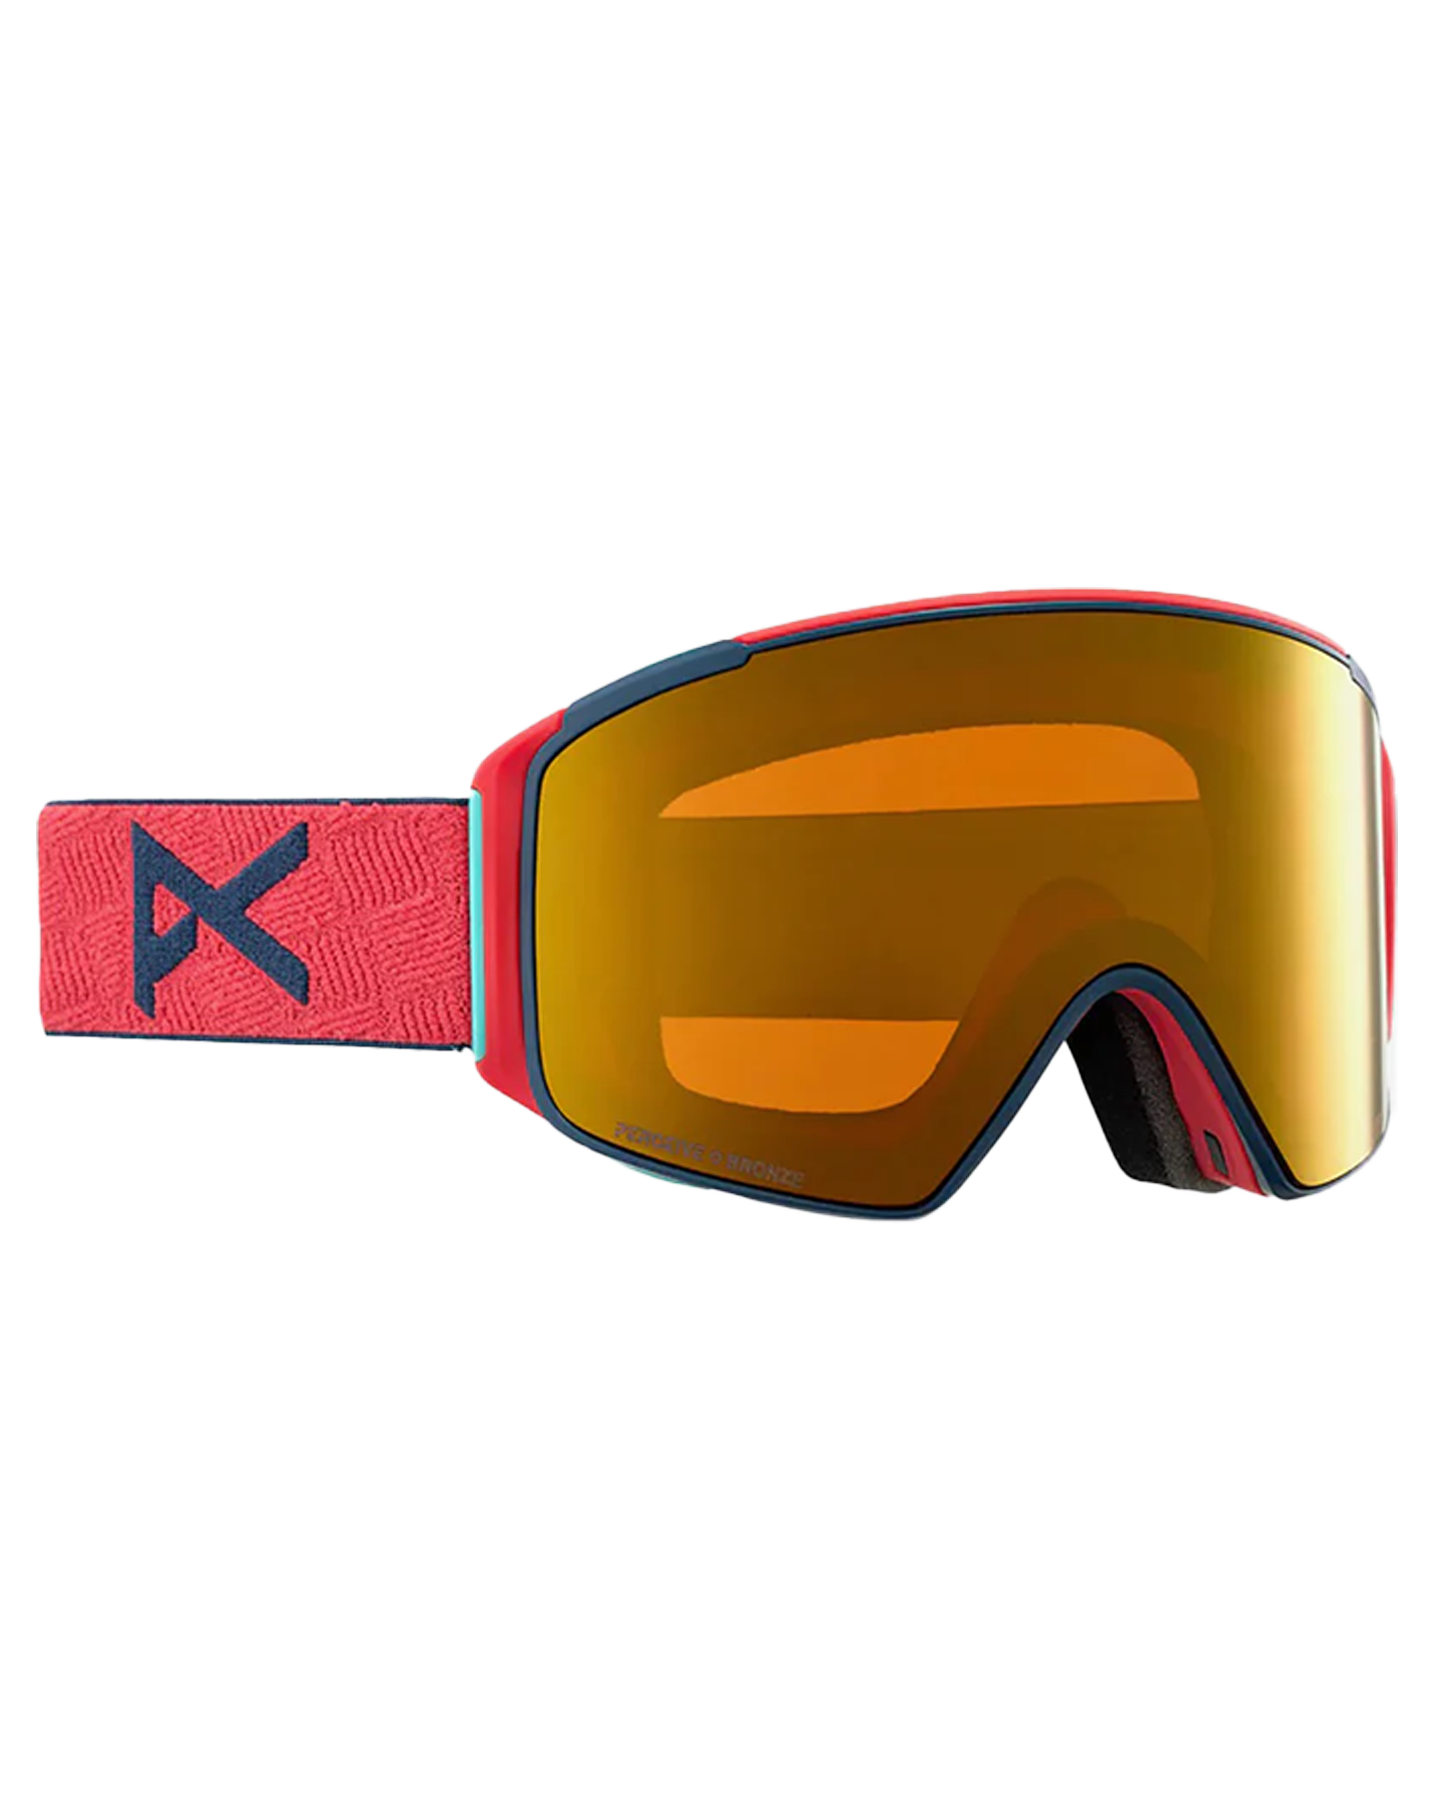 Anon M4S Cylindrical Low Bridge Fit Snow Goggles + Bonus Lens + MFI - Coral / Perceive Sunny Bronze Men's Snow Goggles - Trojan Wake Ski Snow